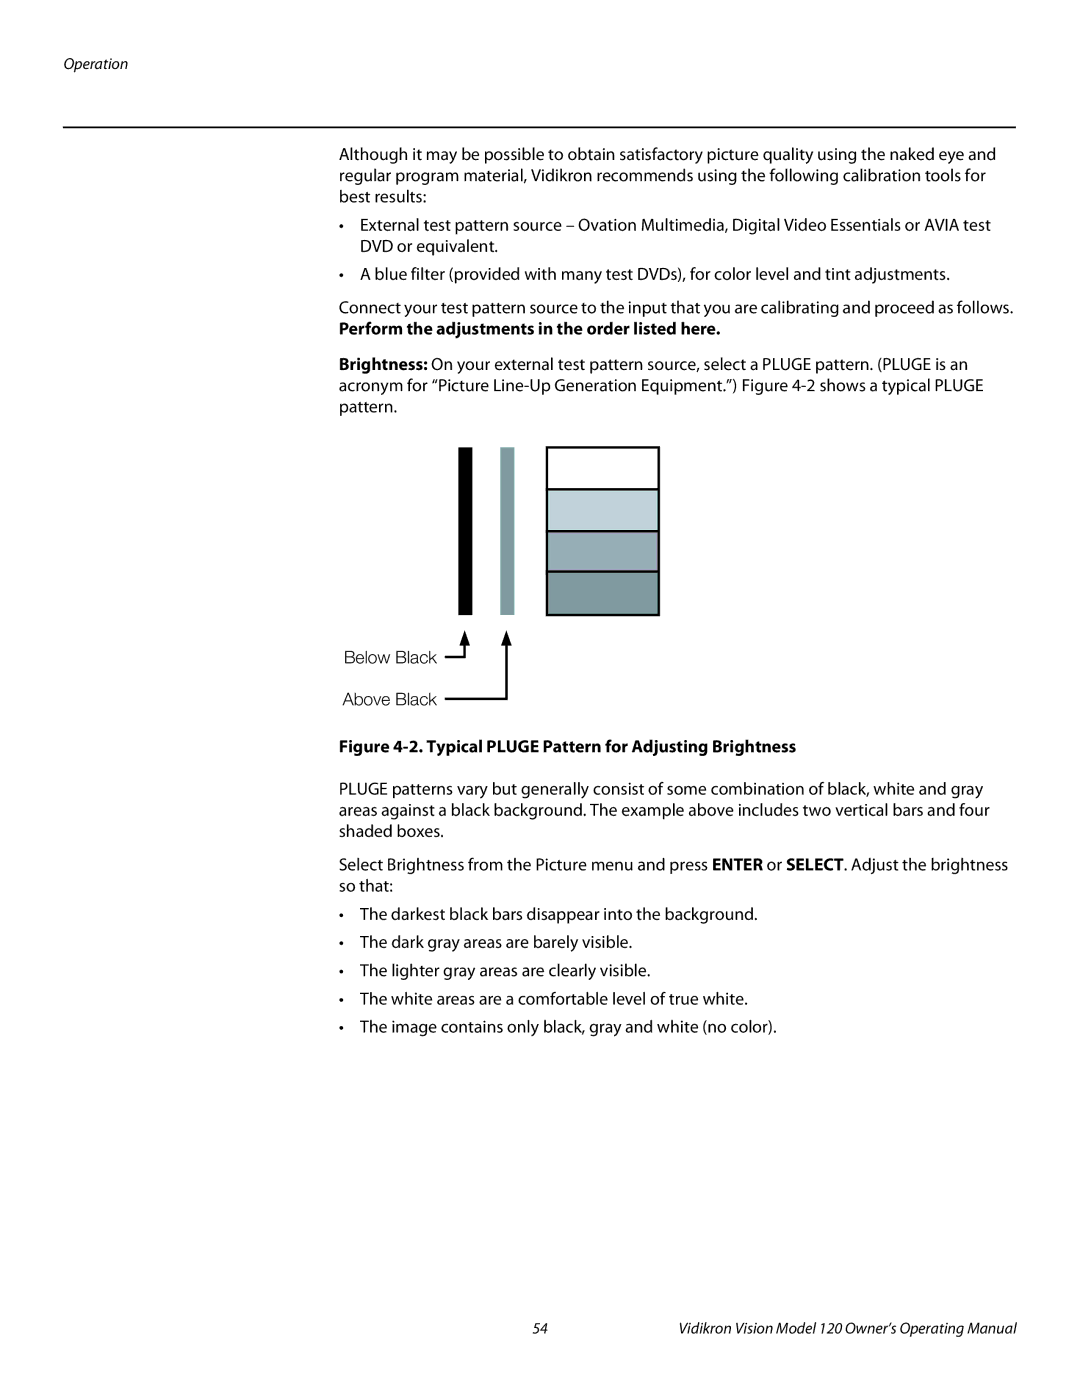 Vidikron v120 manual Perform the adjustments in the order listed here, Typical Pluge Pattern for Adjusting Brightness 